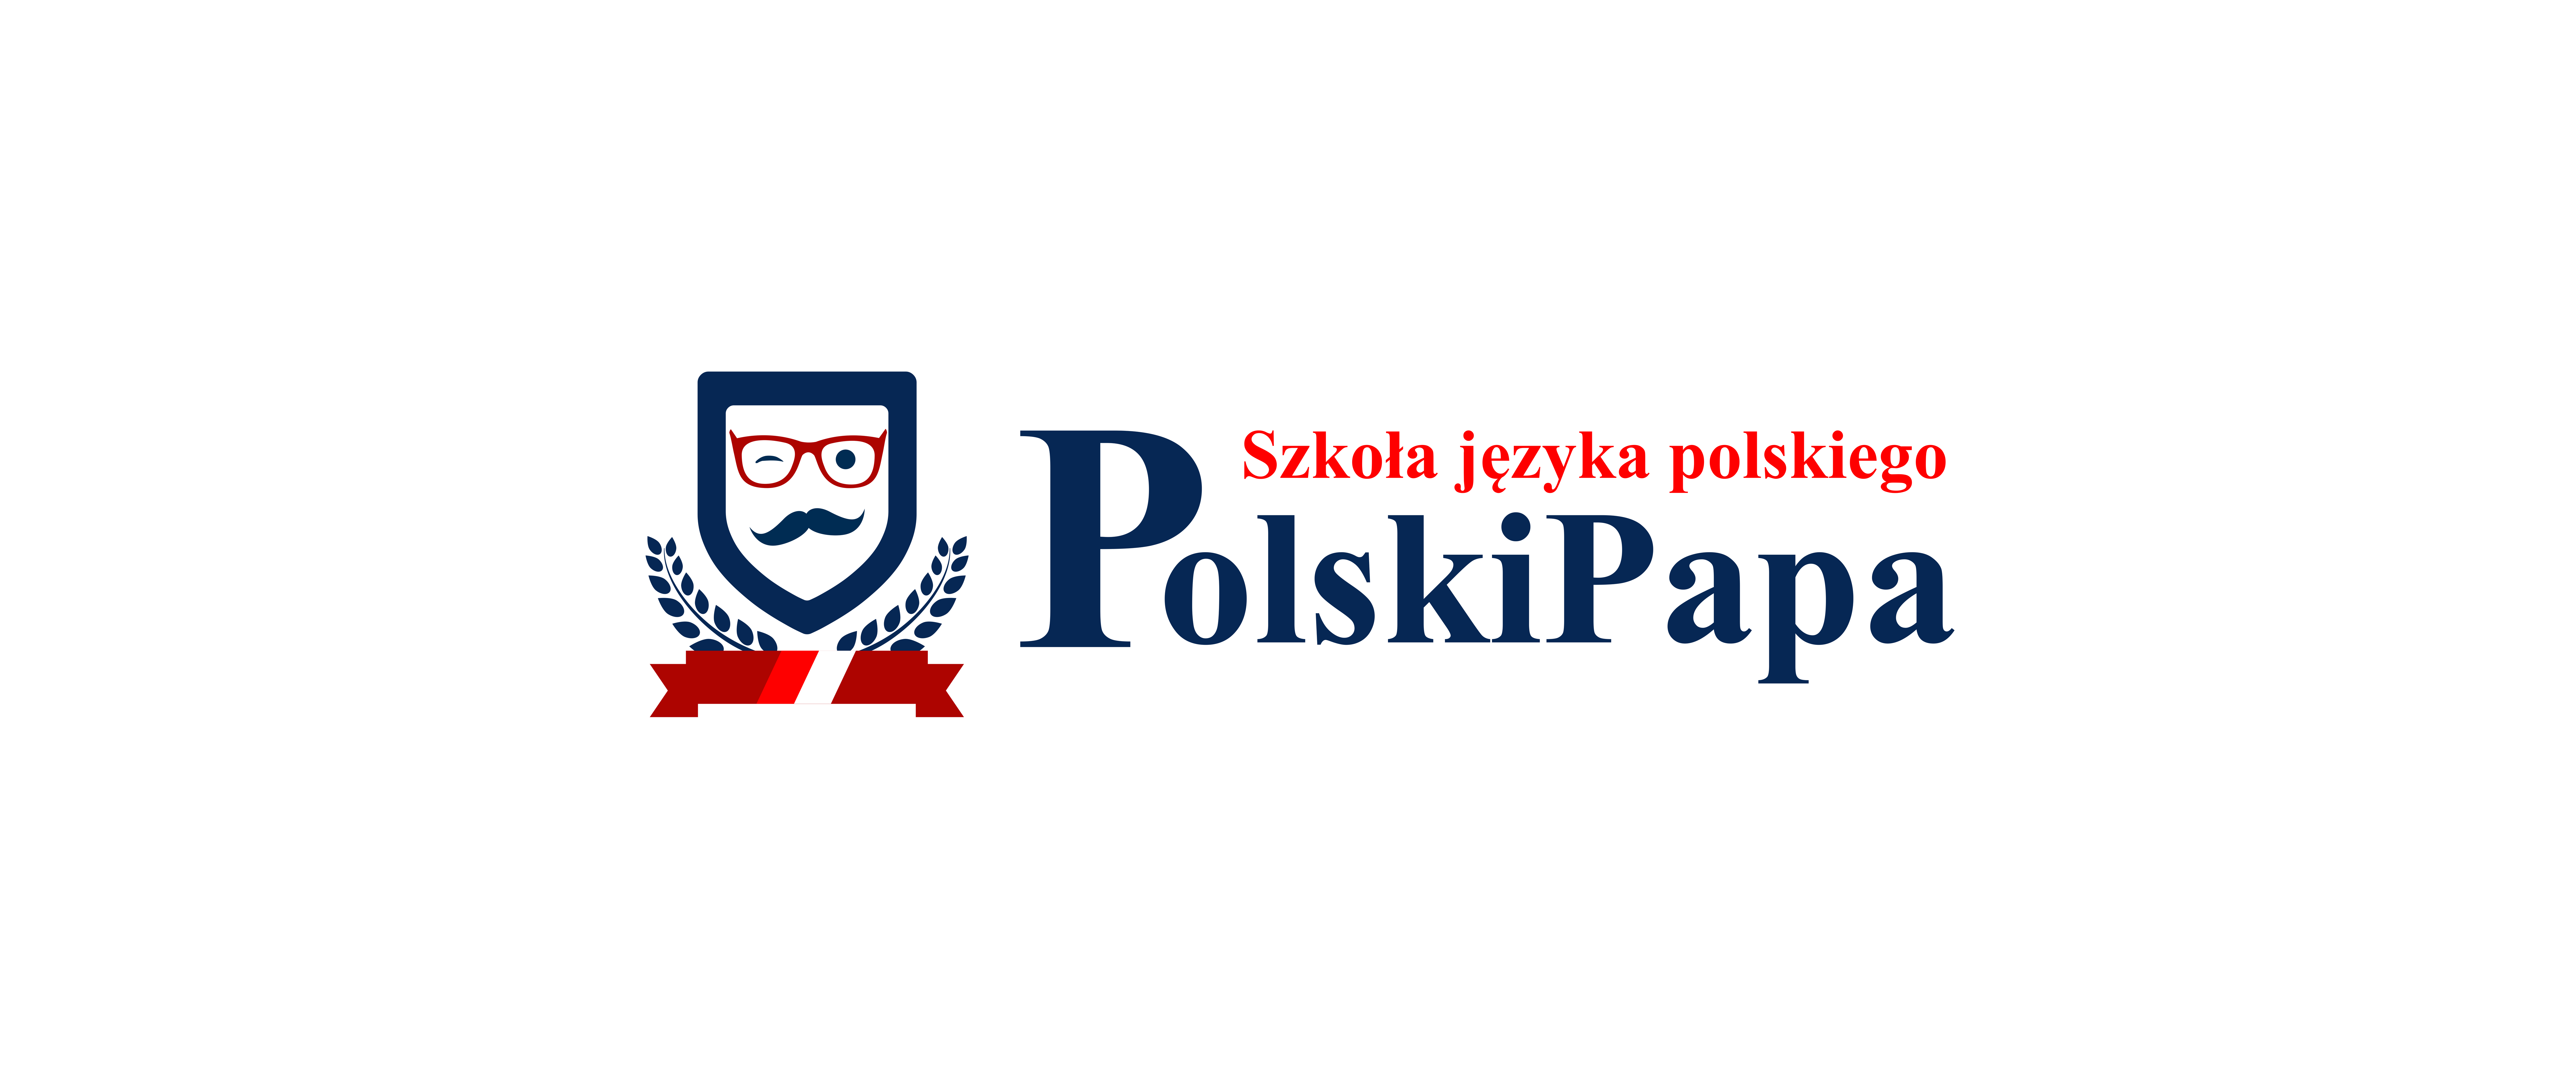 PolskiPapa - Школа польского языка 